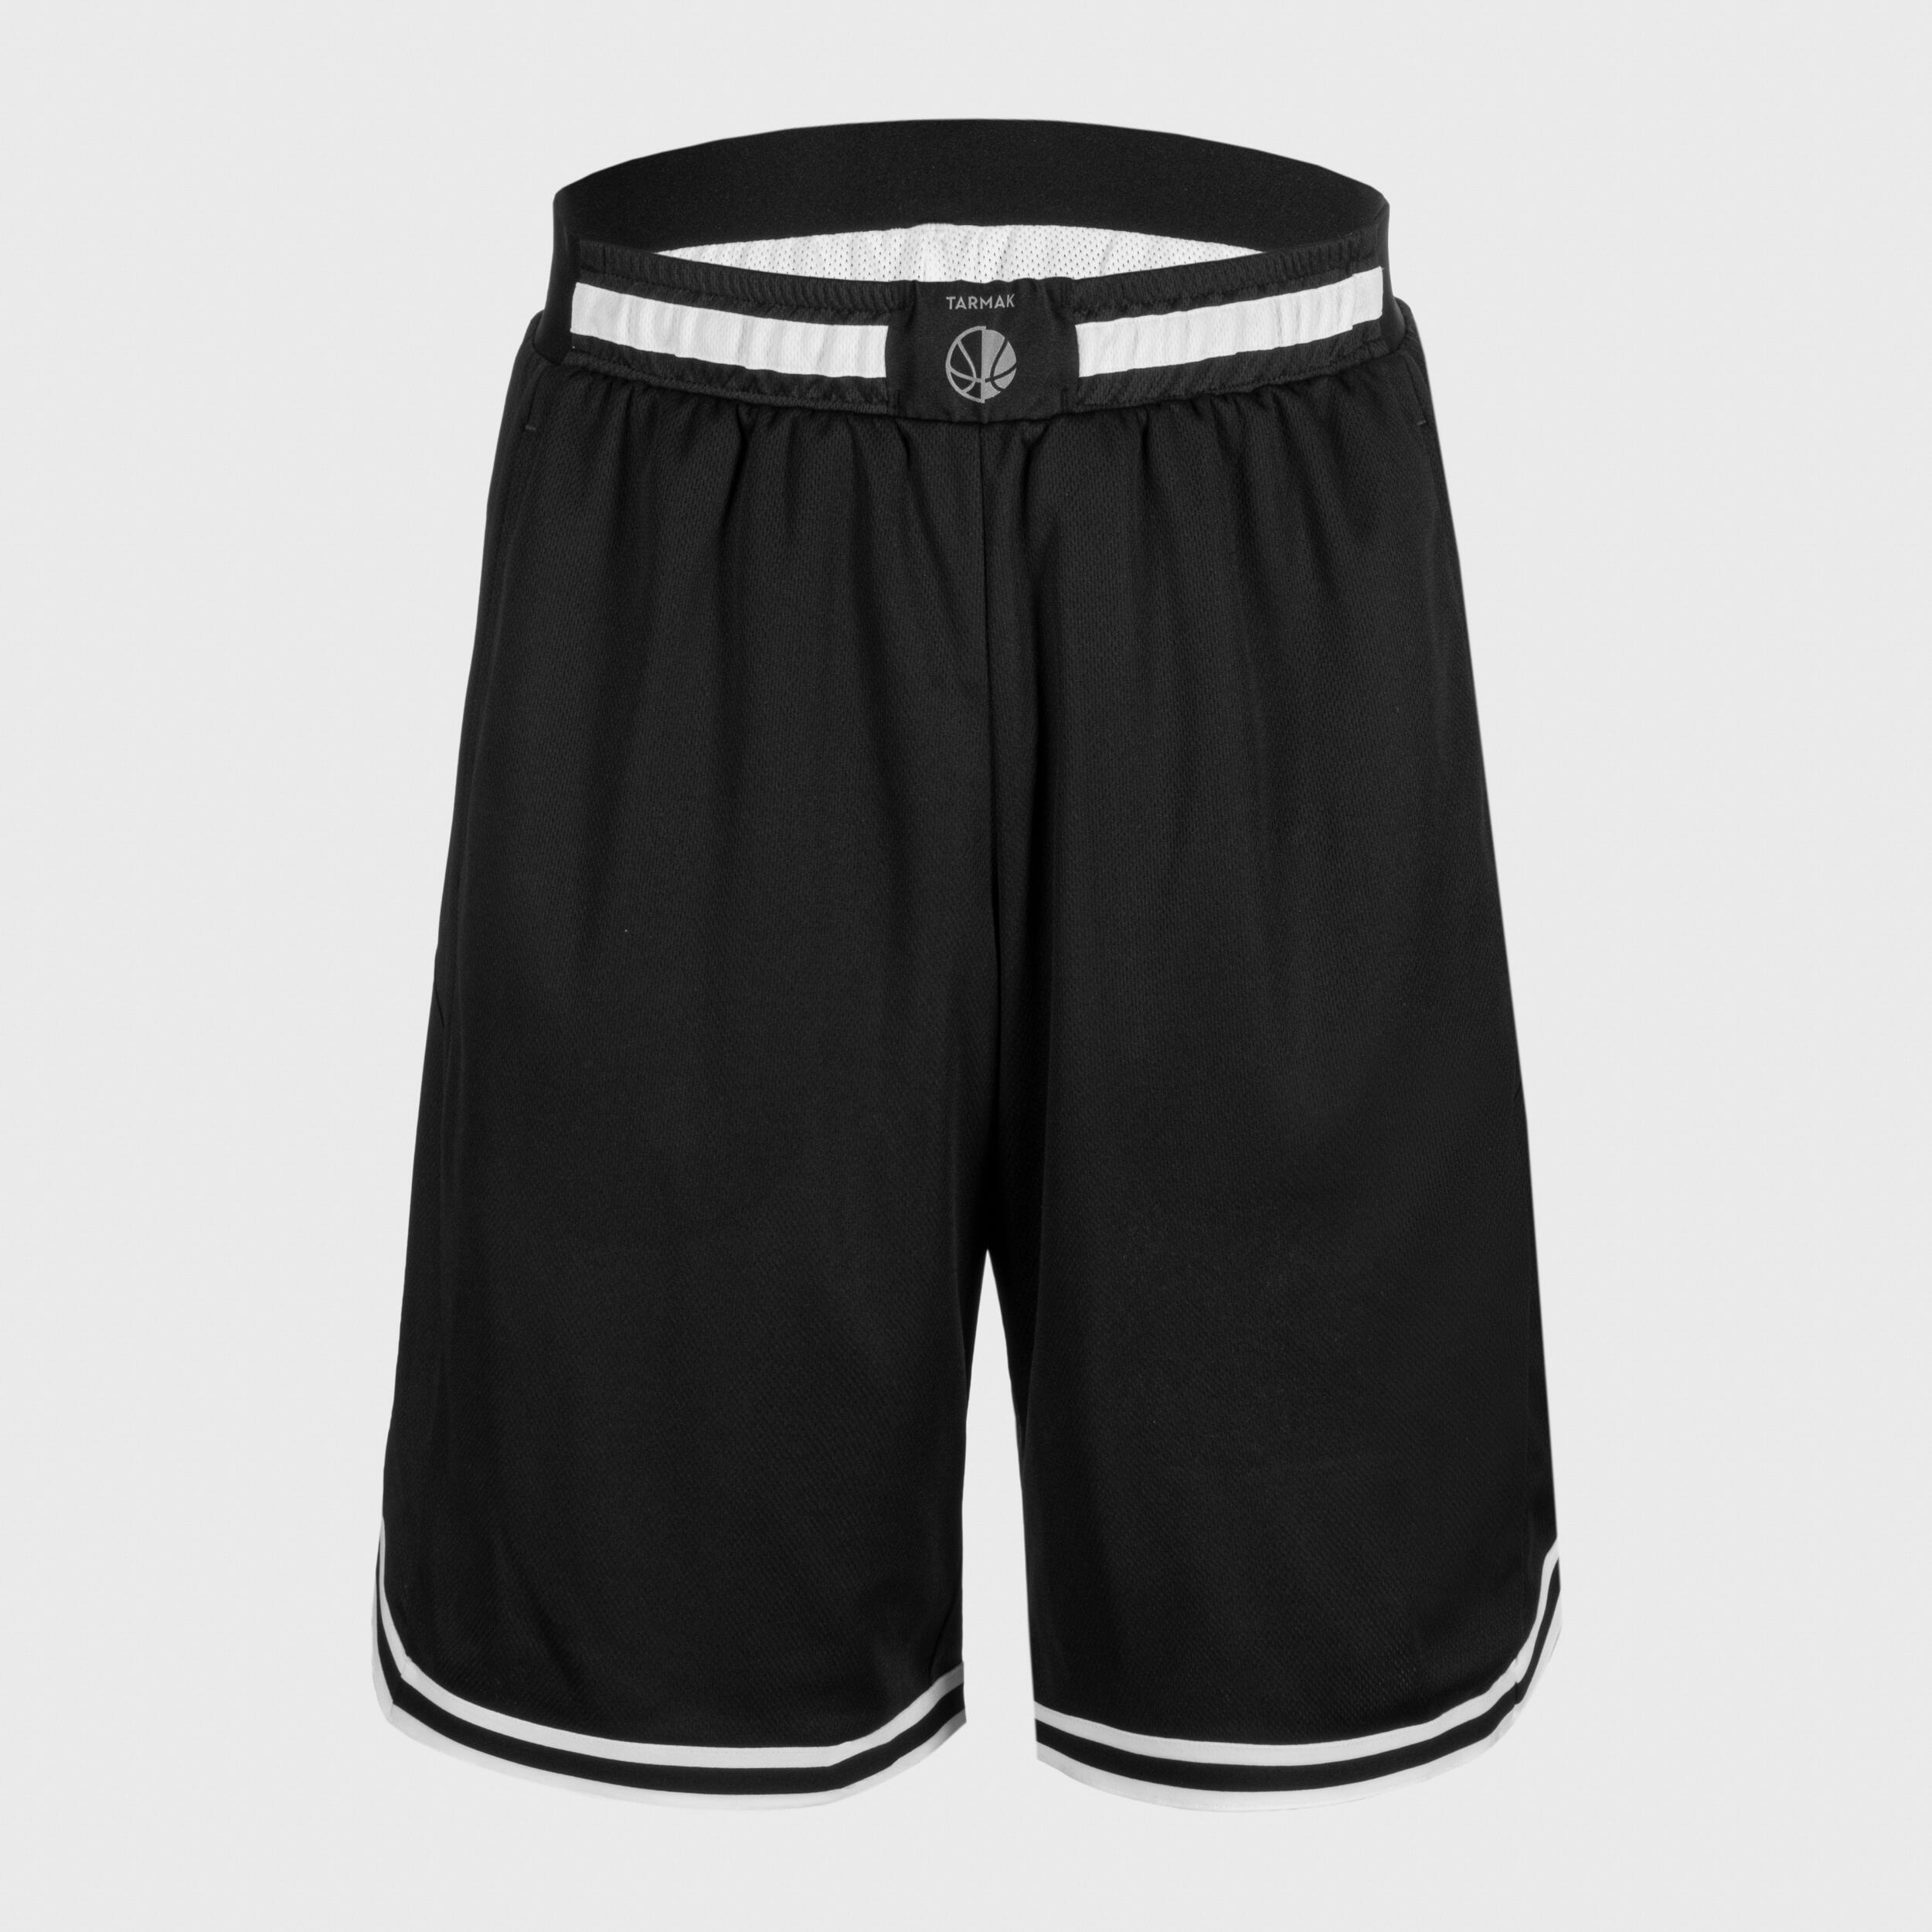 Adult 2-Way Basketball Shorts SH500R - Black/White 7/9